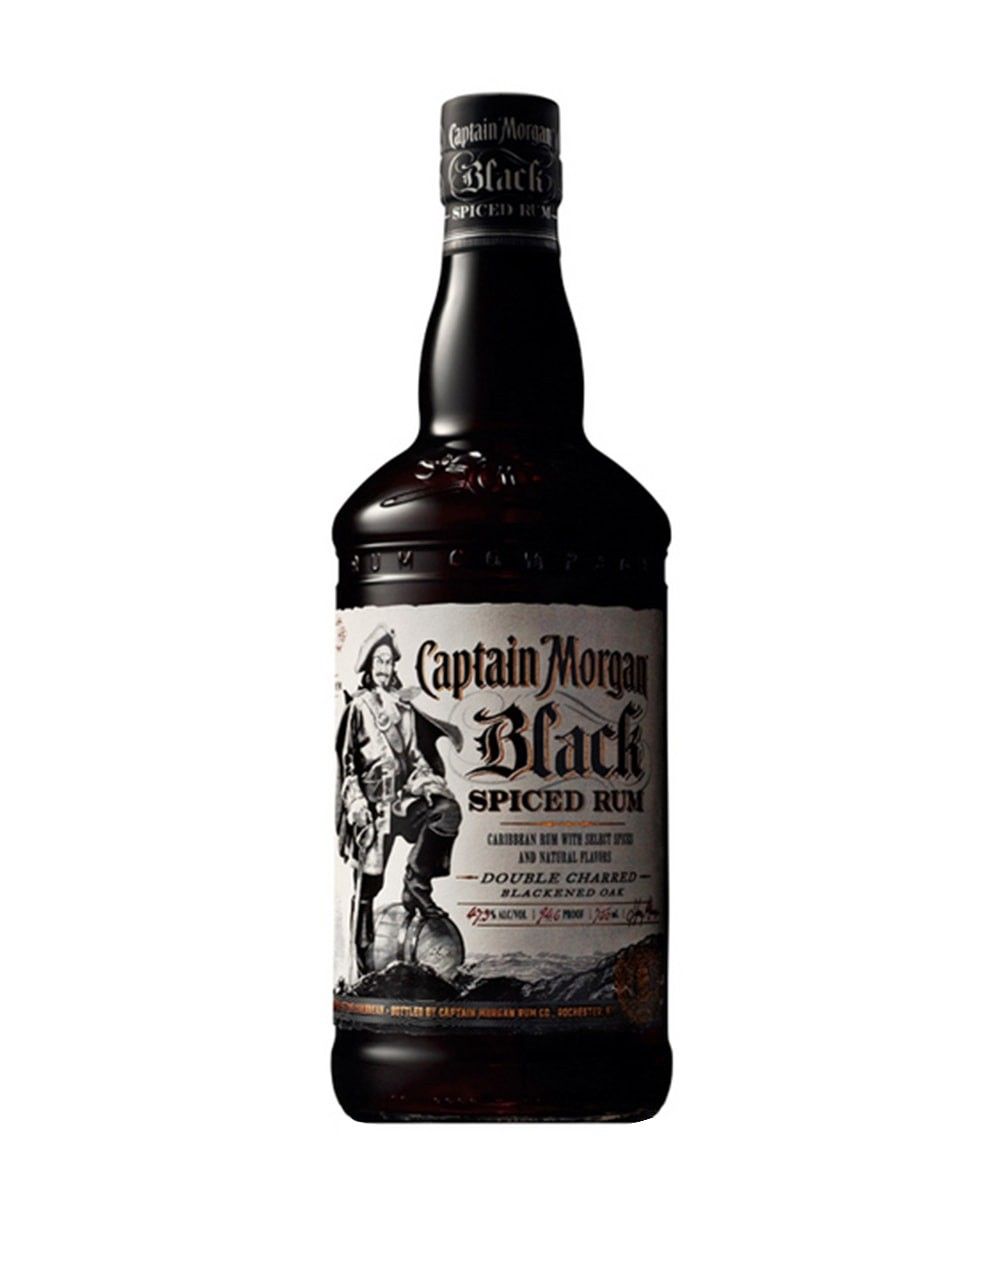 Captain Morgan Black Spiced Rum | Buy Online or Send as a